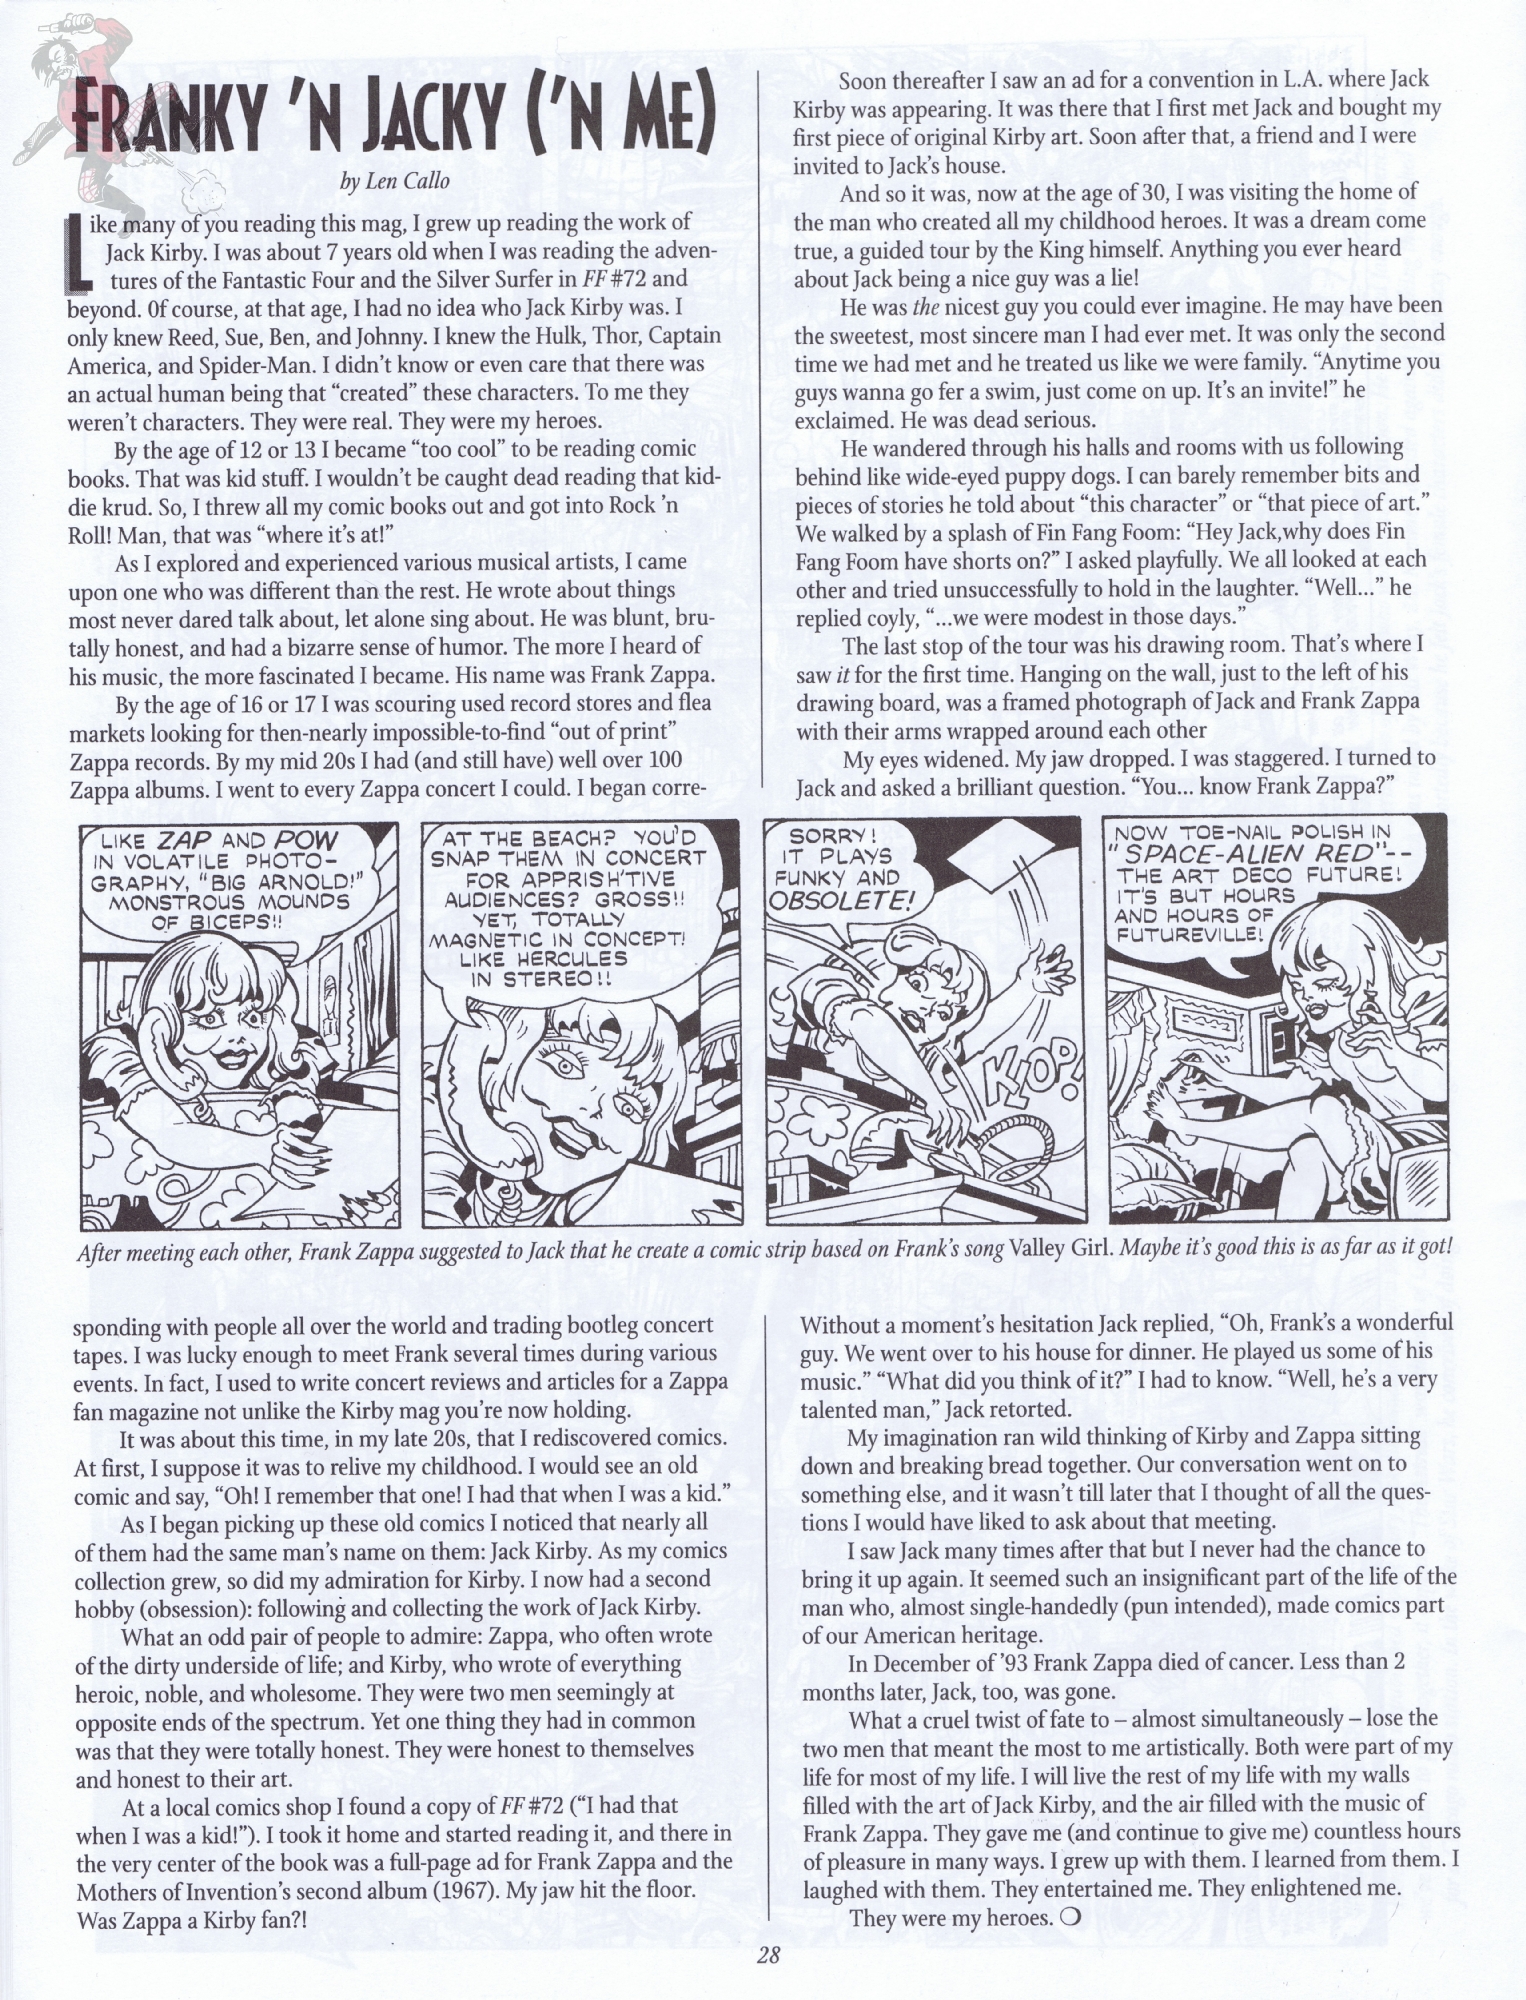 Jack Kirby/Frank Zappa article by Len Callo Comic Art